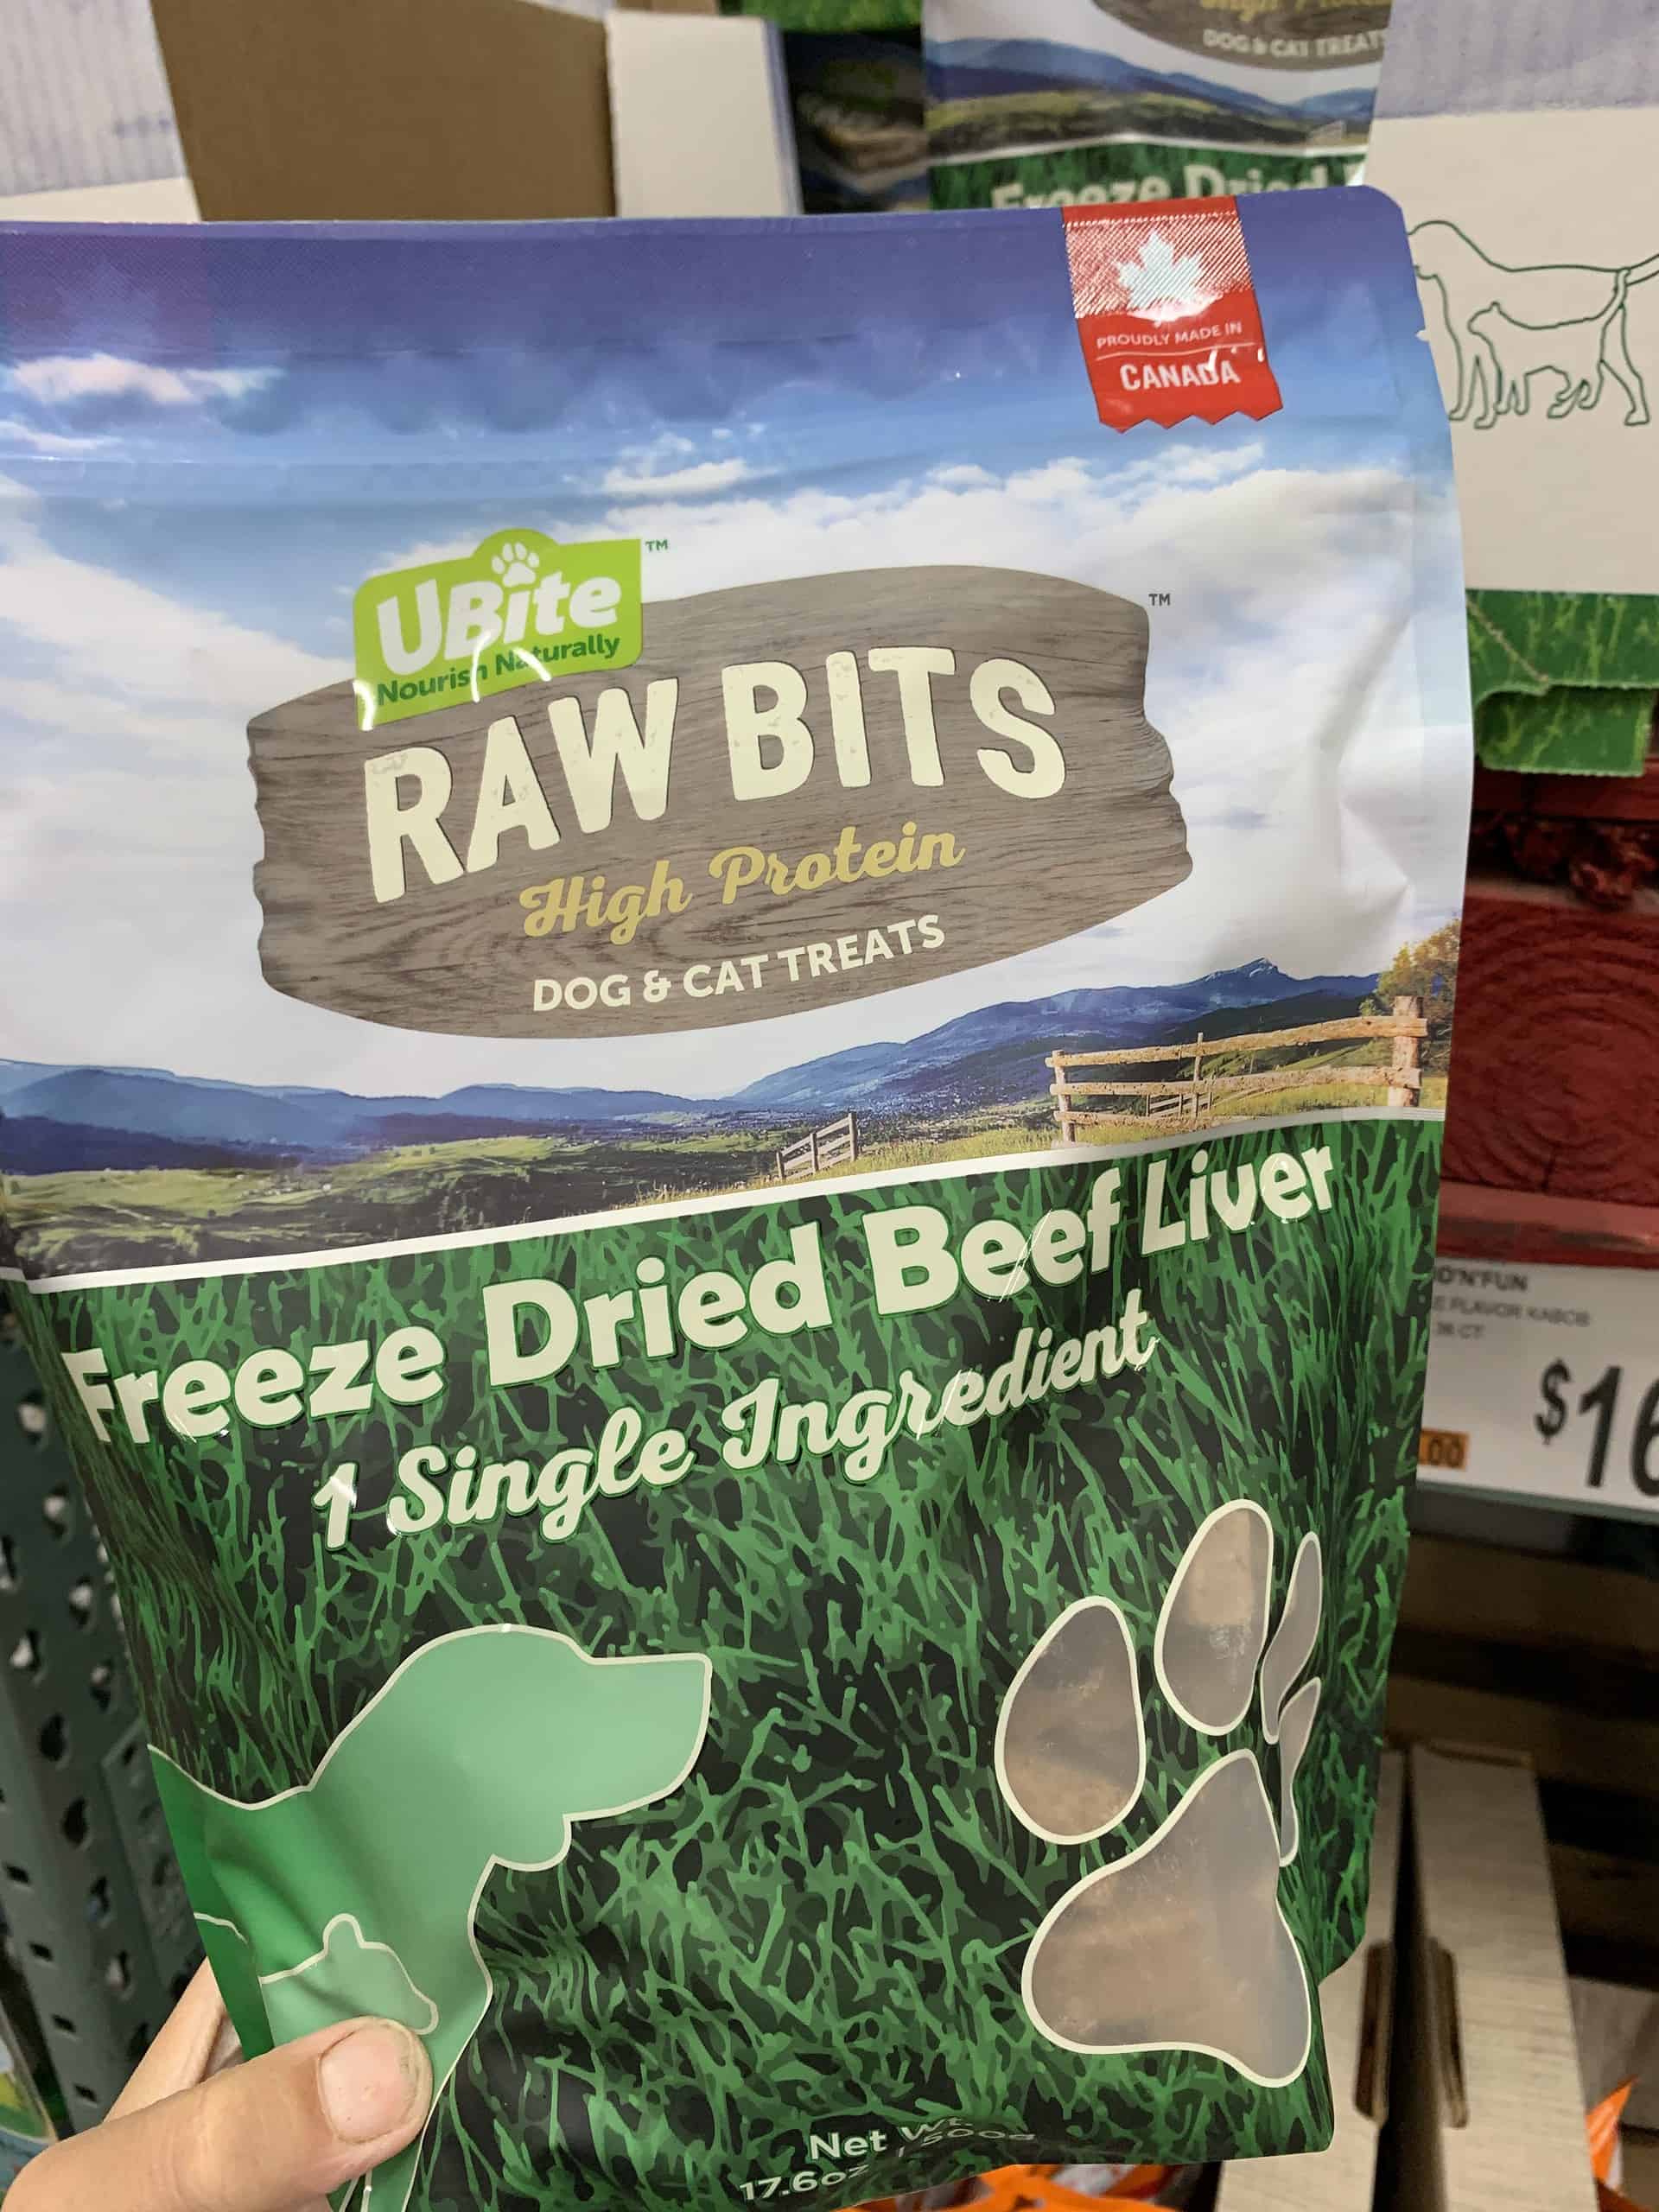 uBite Raw Bits Dog & Cat Treats $5.98 at BJ’s